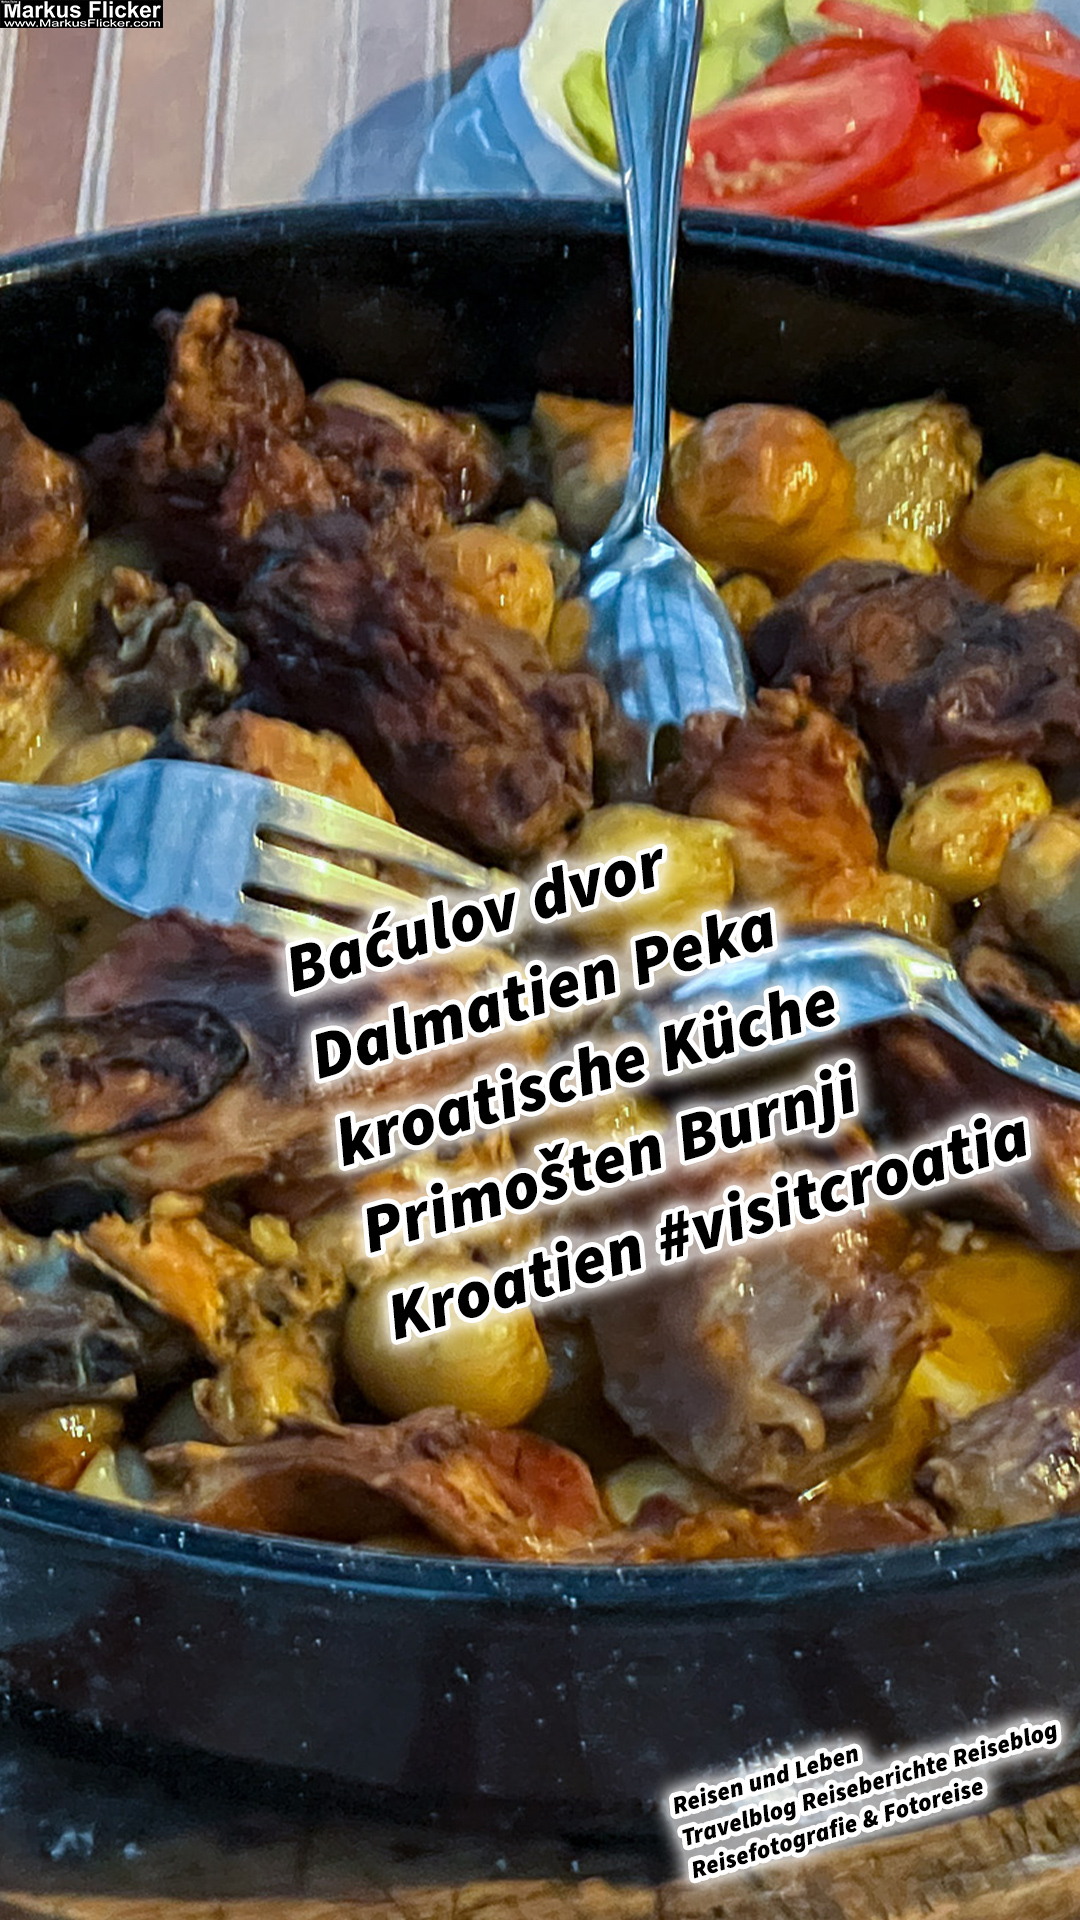 Baćulov dvor Dalmatien Peka kroatische Küche Primošten Burnji Kroatien #visitcroatia